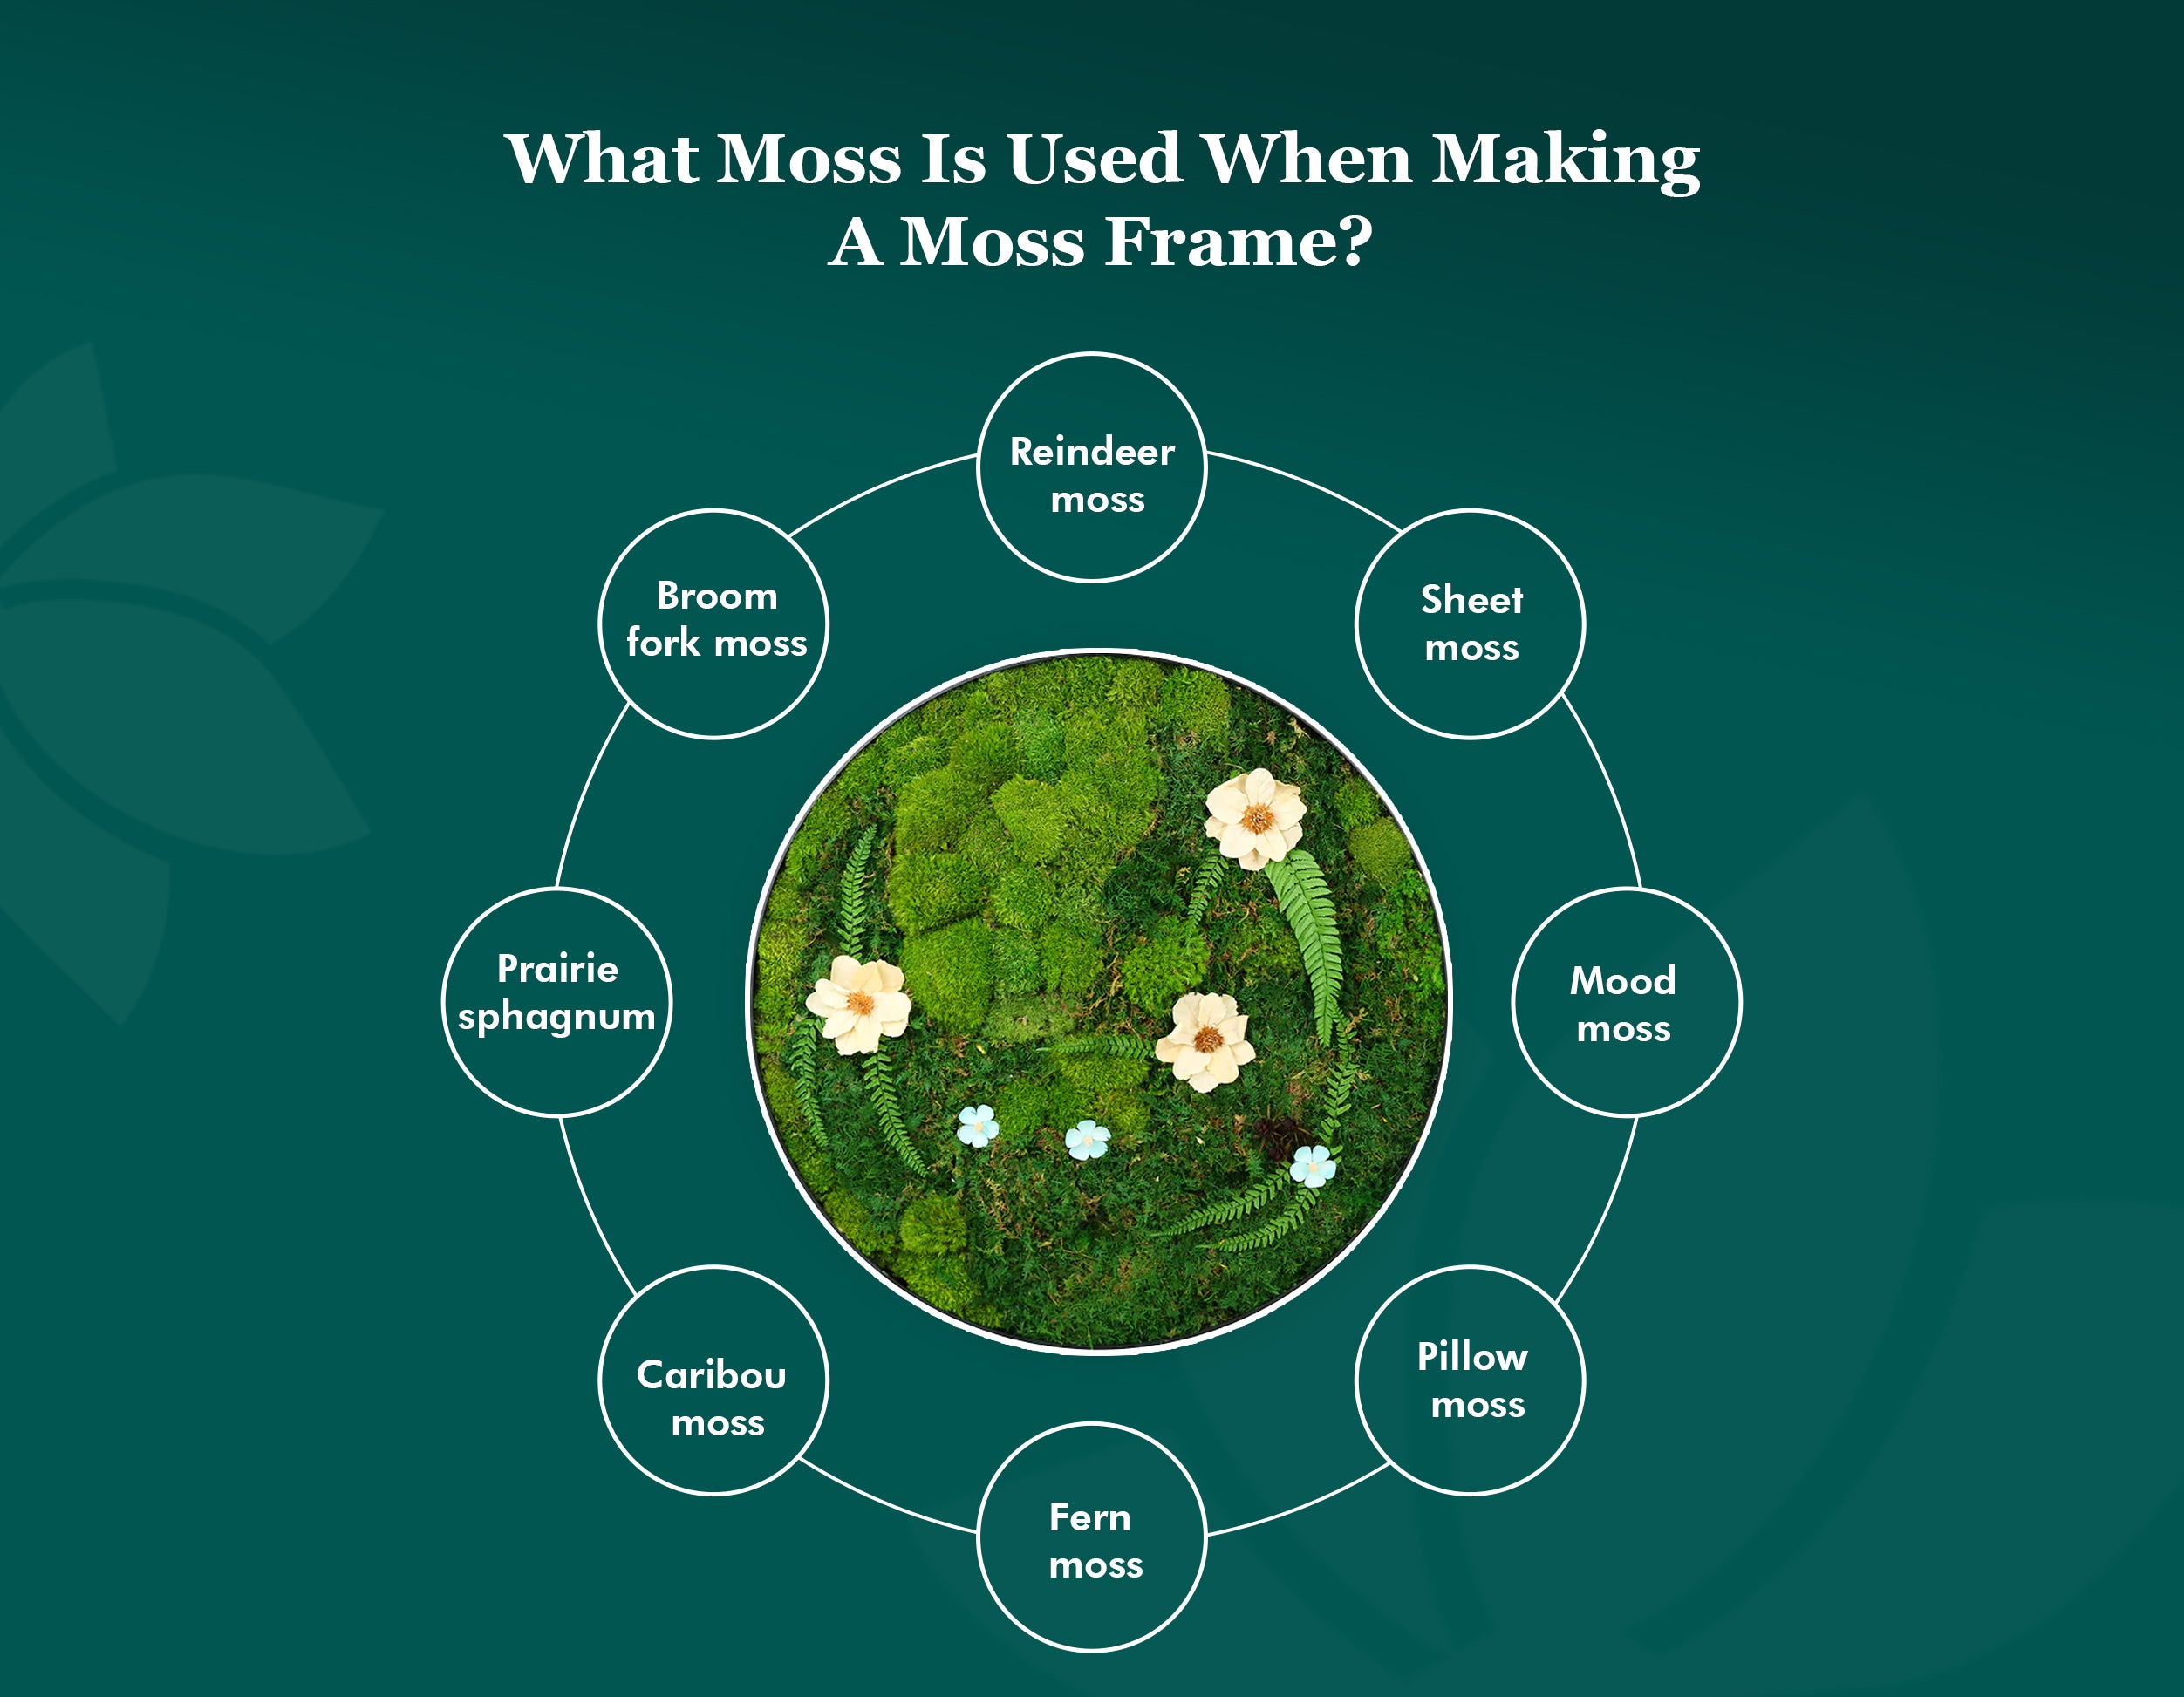 How to Make a Moss Frame